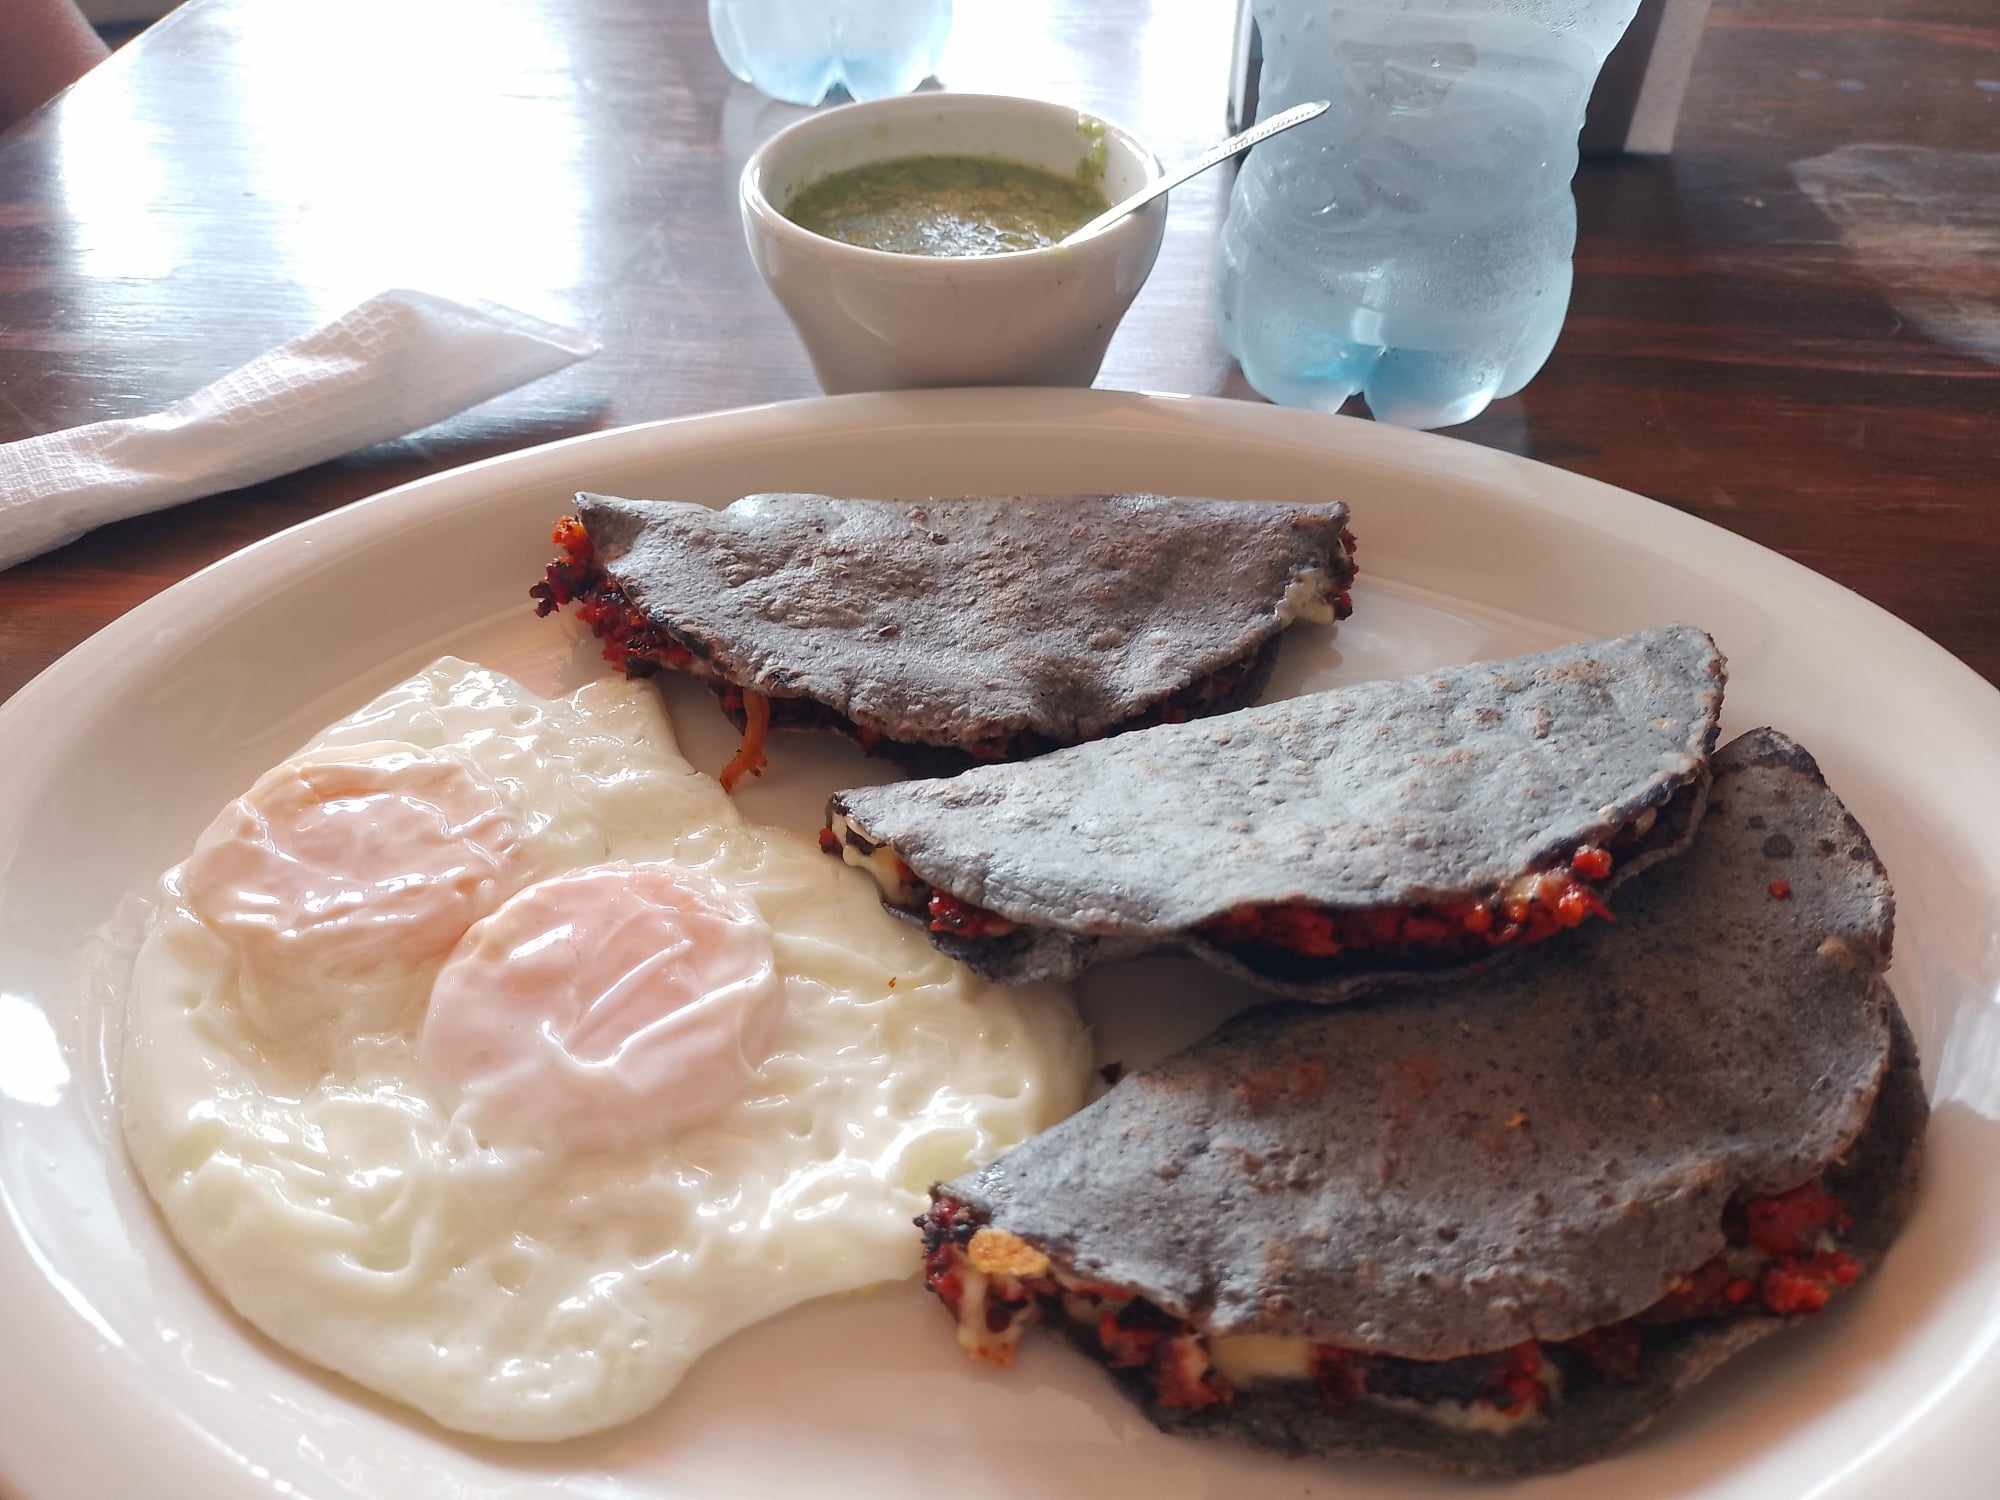 Food in Valle de bravo mexico - Fabale - chorizo quesadillas